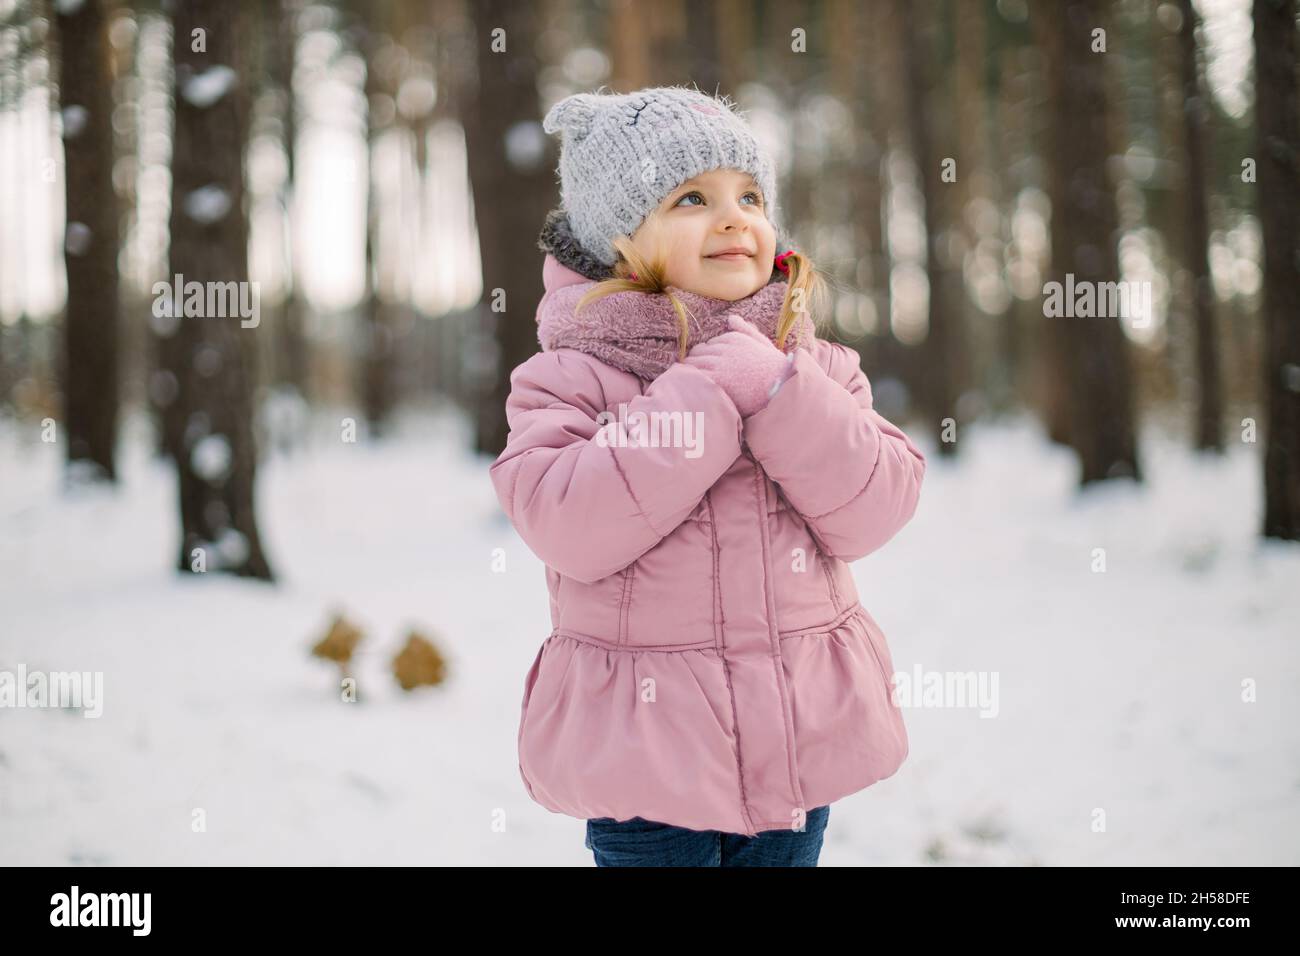 Dreamy cute little girl in stylish warm winter clothes, posing